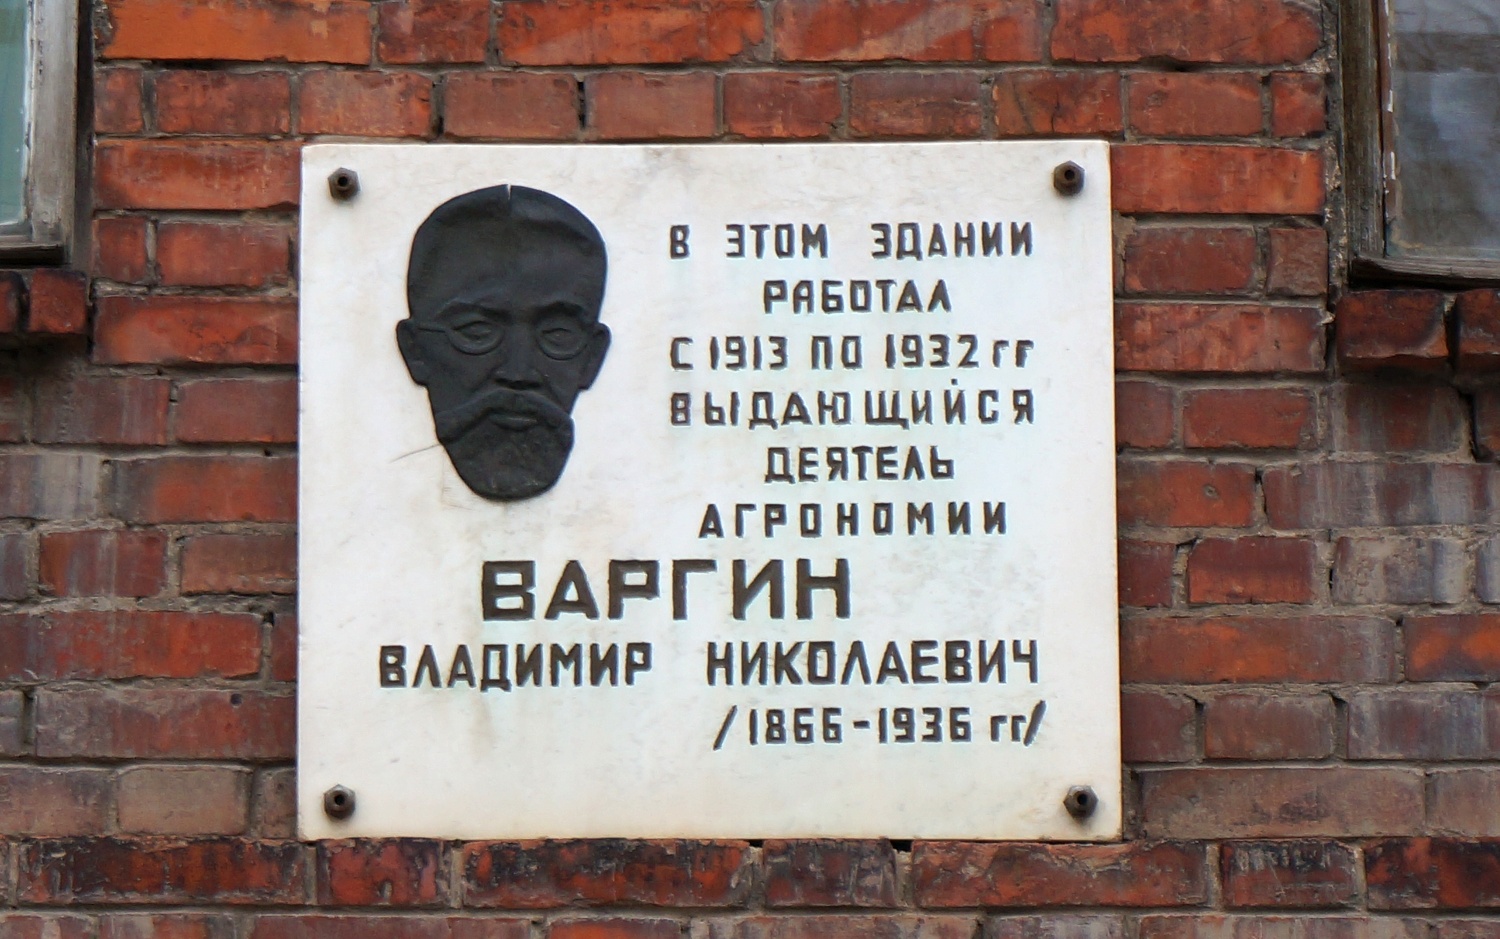 Perm, Улица Краснова, 10. Perm — Memorial plaques